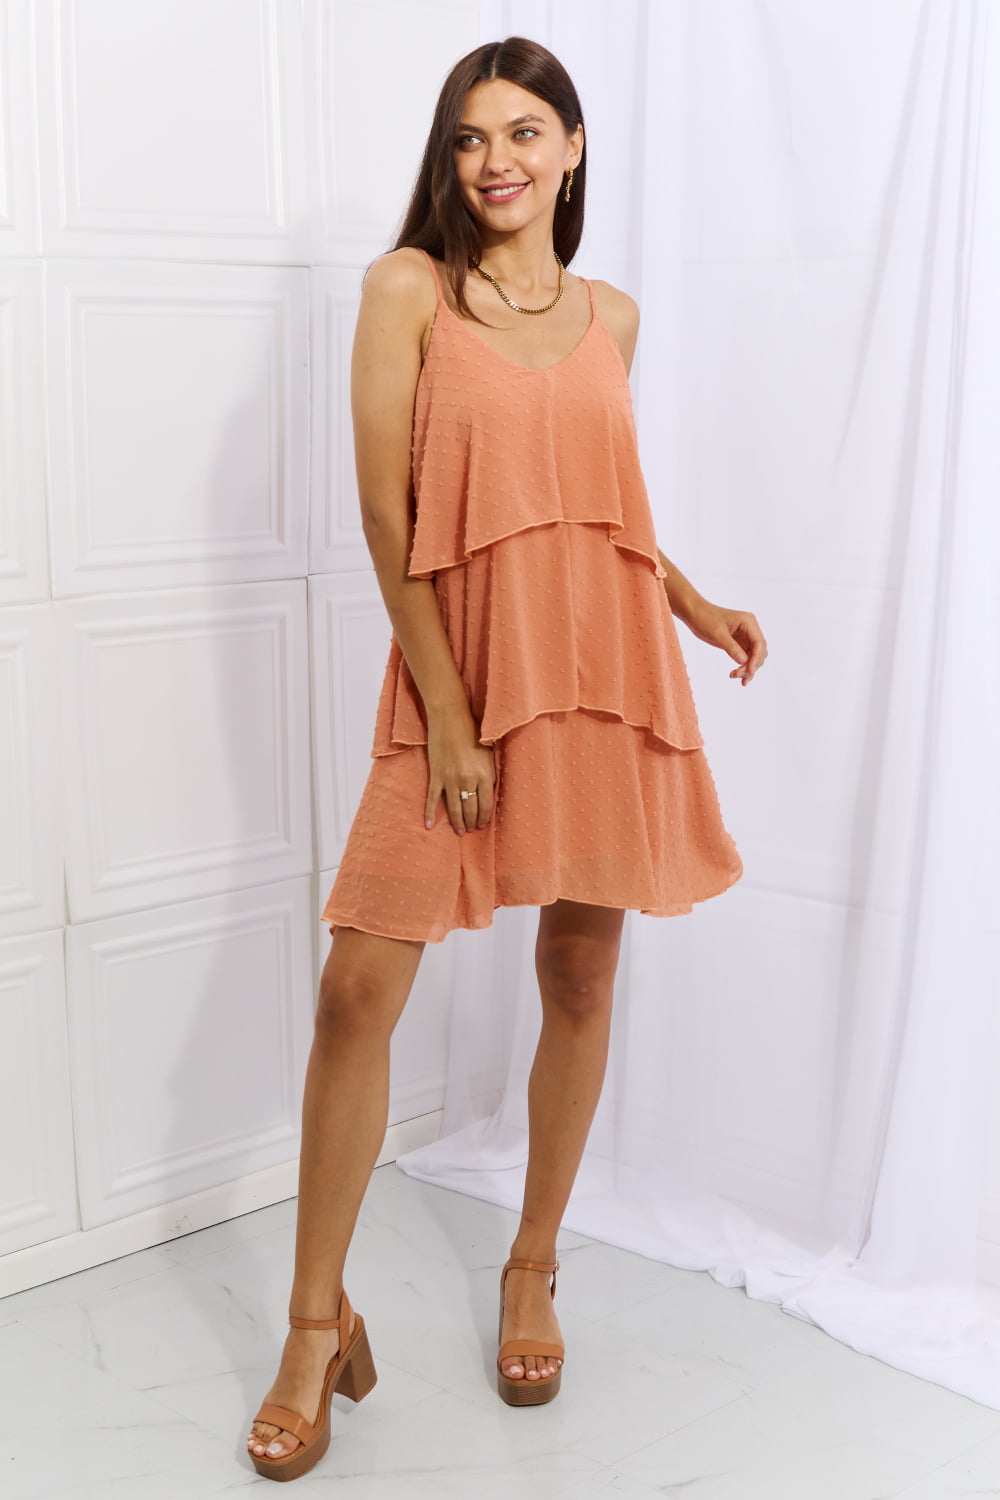 Women's Full Size Cascade Ruffle Short Cami Dress in Sherbet | Mini Dresses | Ro + Ivy